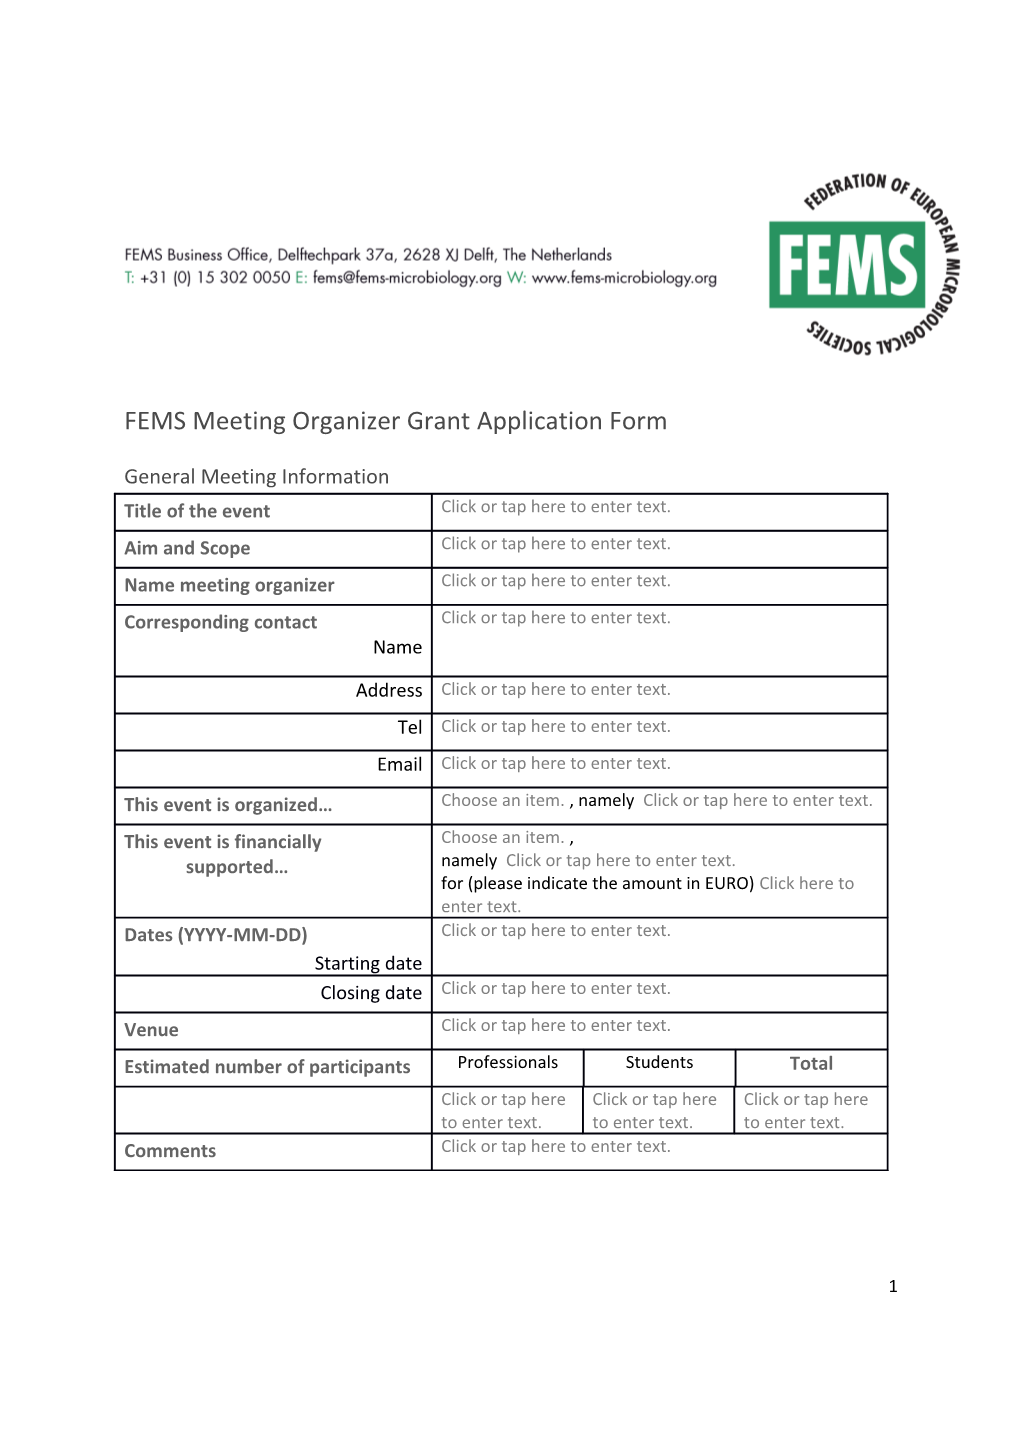 FEMS Meeting Organizer Grant Application Form